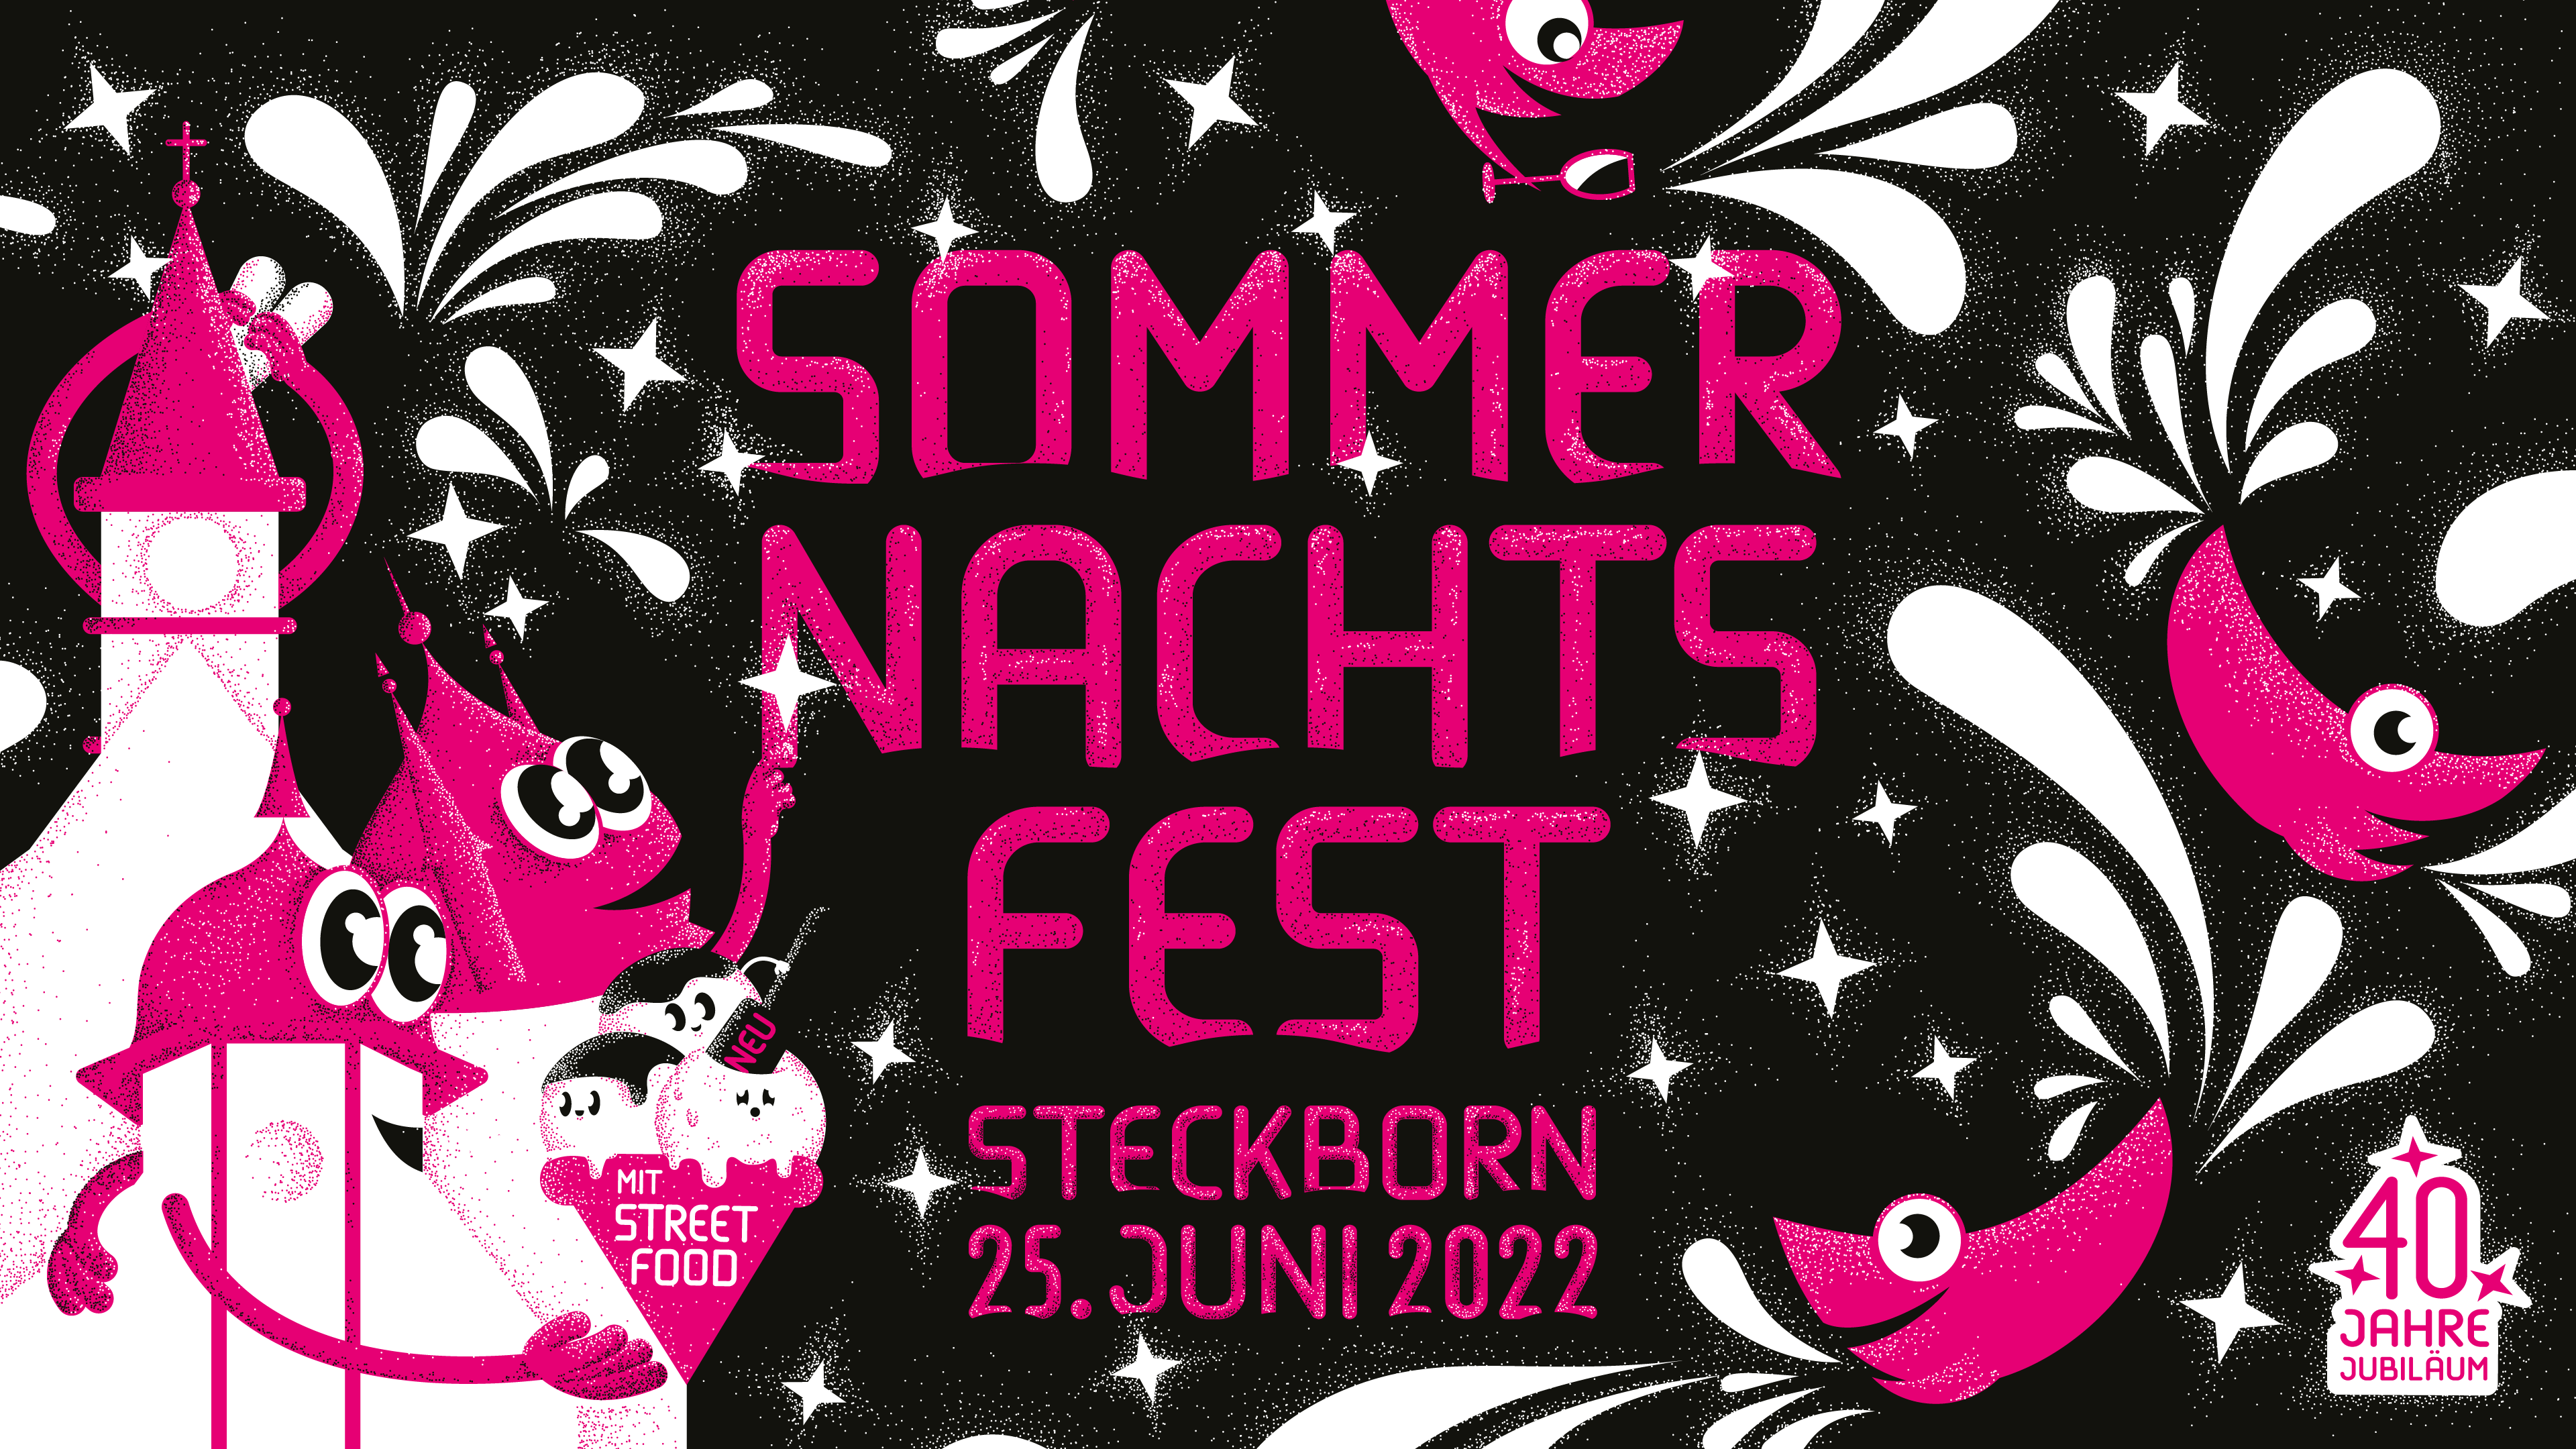 Sommernachtsfest Steckborn